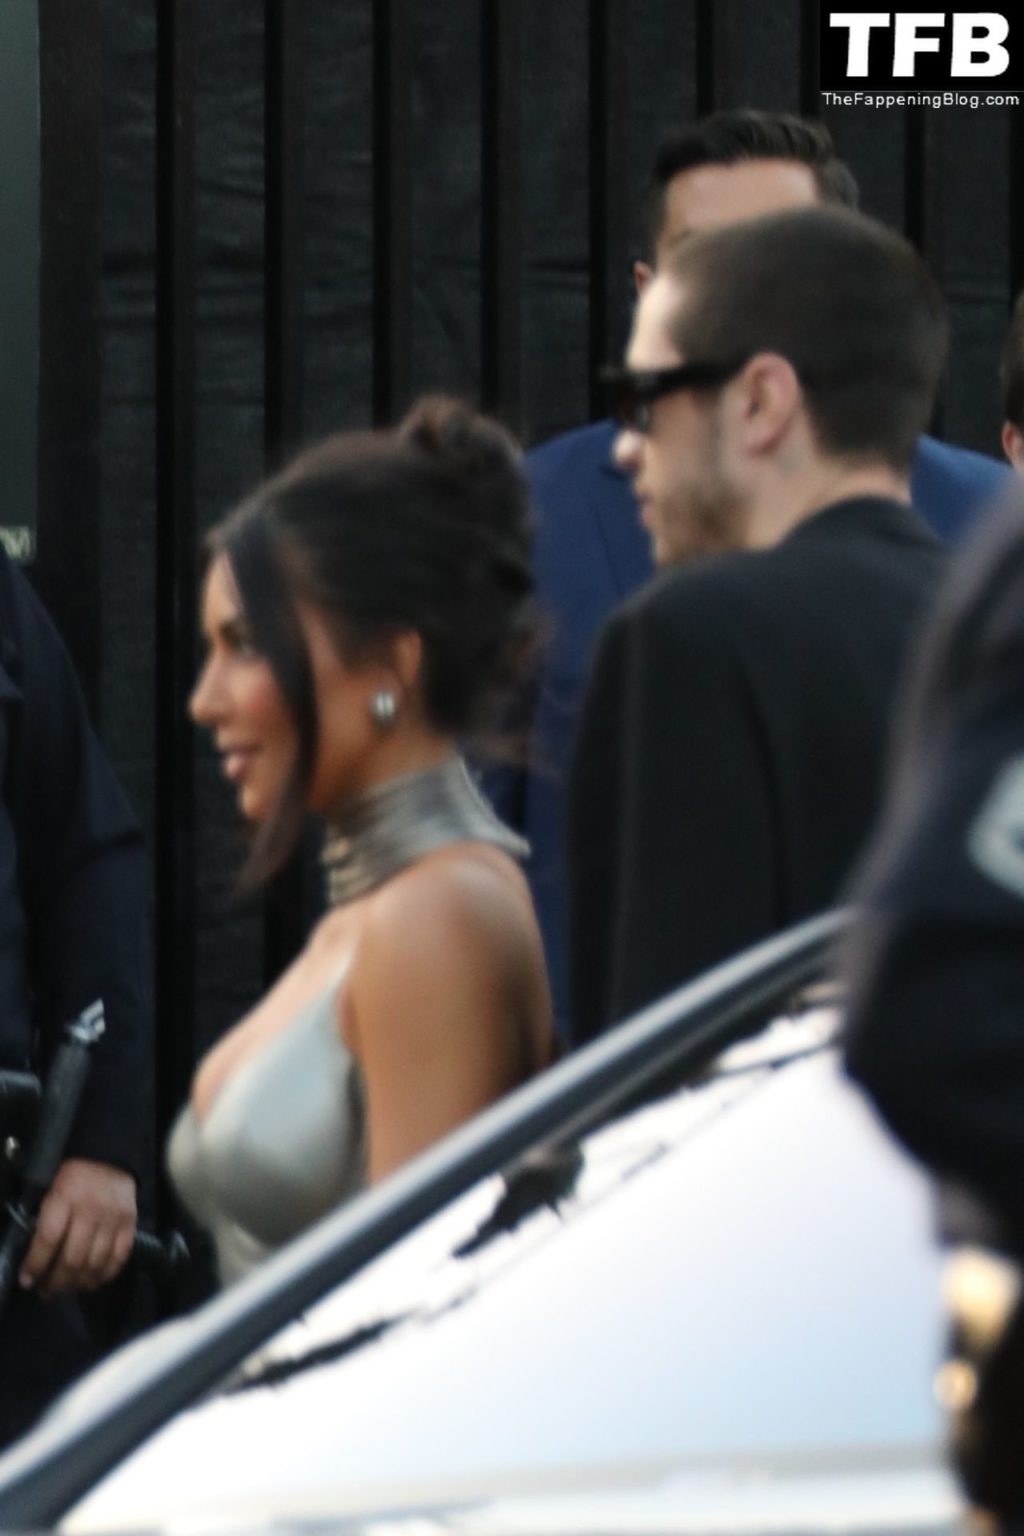 Kim Kardashian &amp; Pete Davidson Make a Grand Entrance to HULU’s “The Kardashian’s” Event (18 Photos)